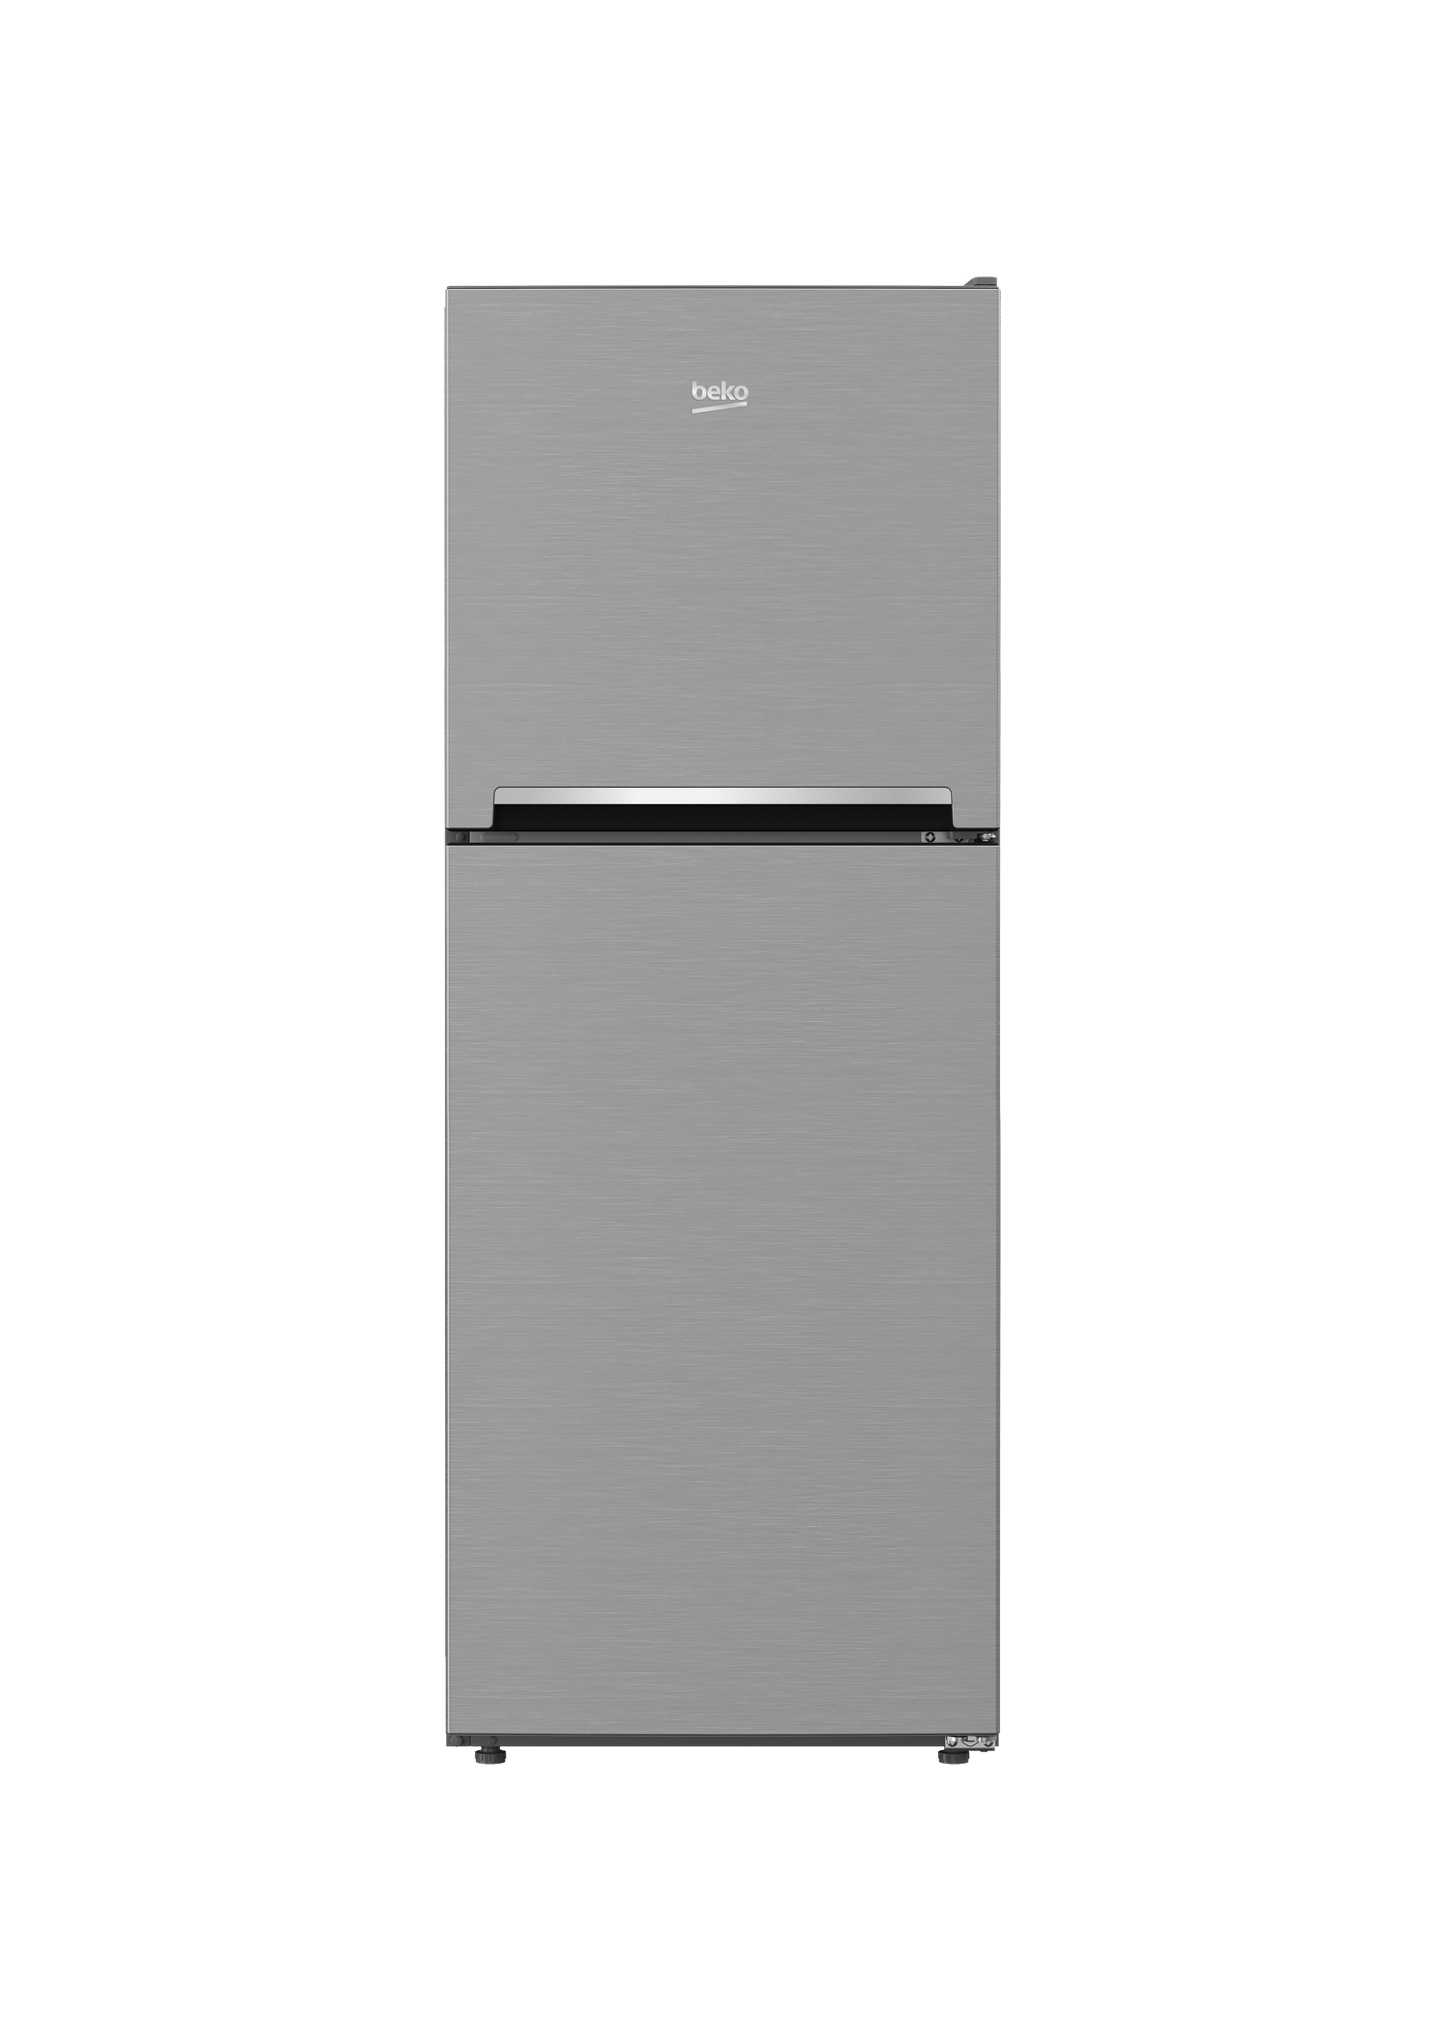 Beko RDNT271I20P 271 litres Top Freezer Refrigerator